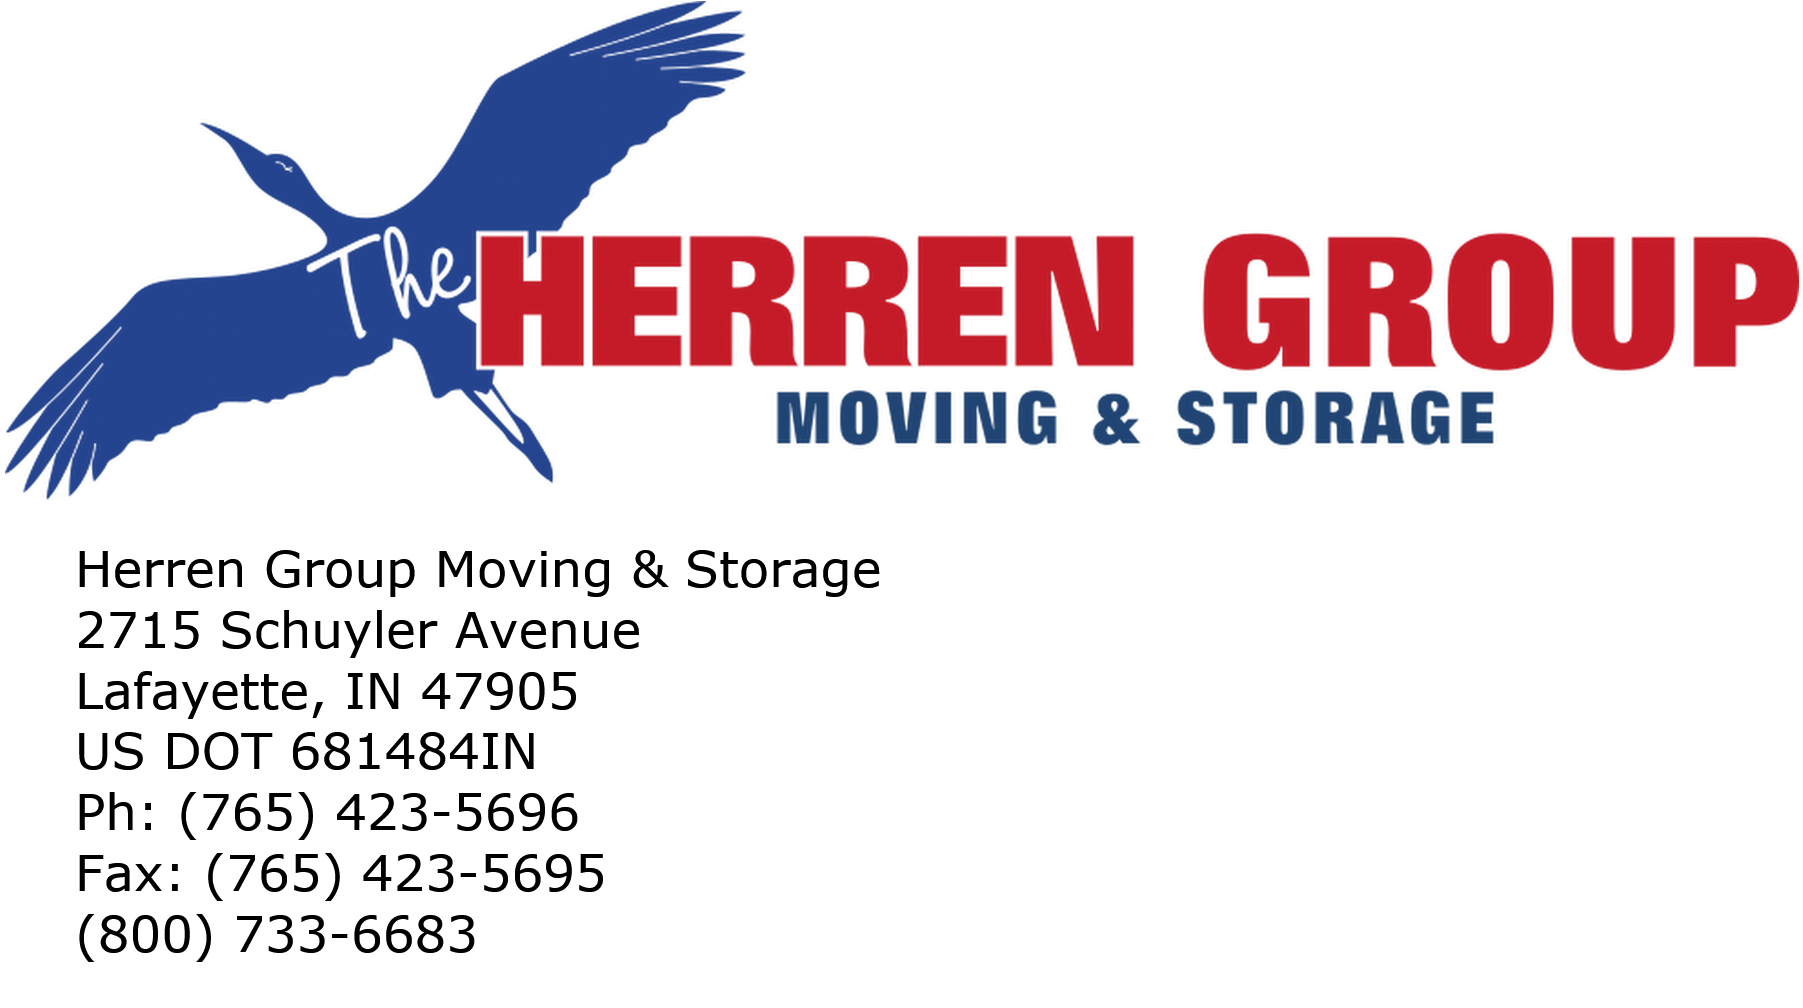 Herren's Twin City Moving & Storage, Inc. Photo